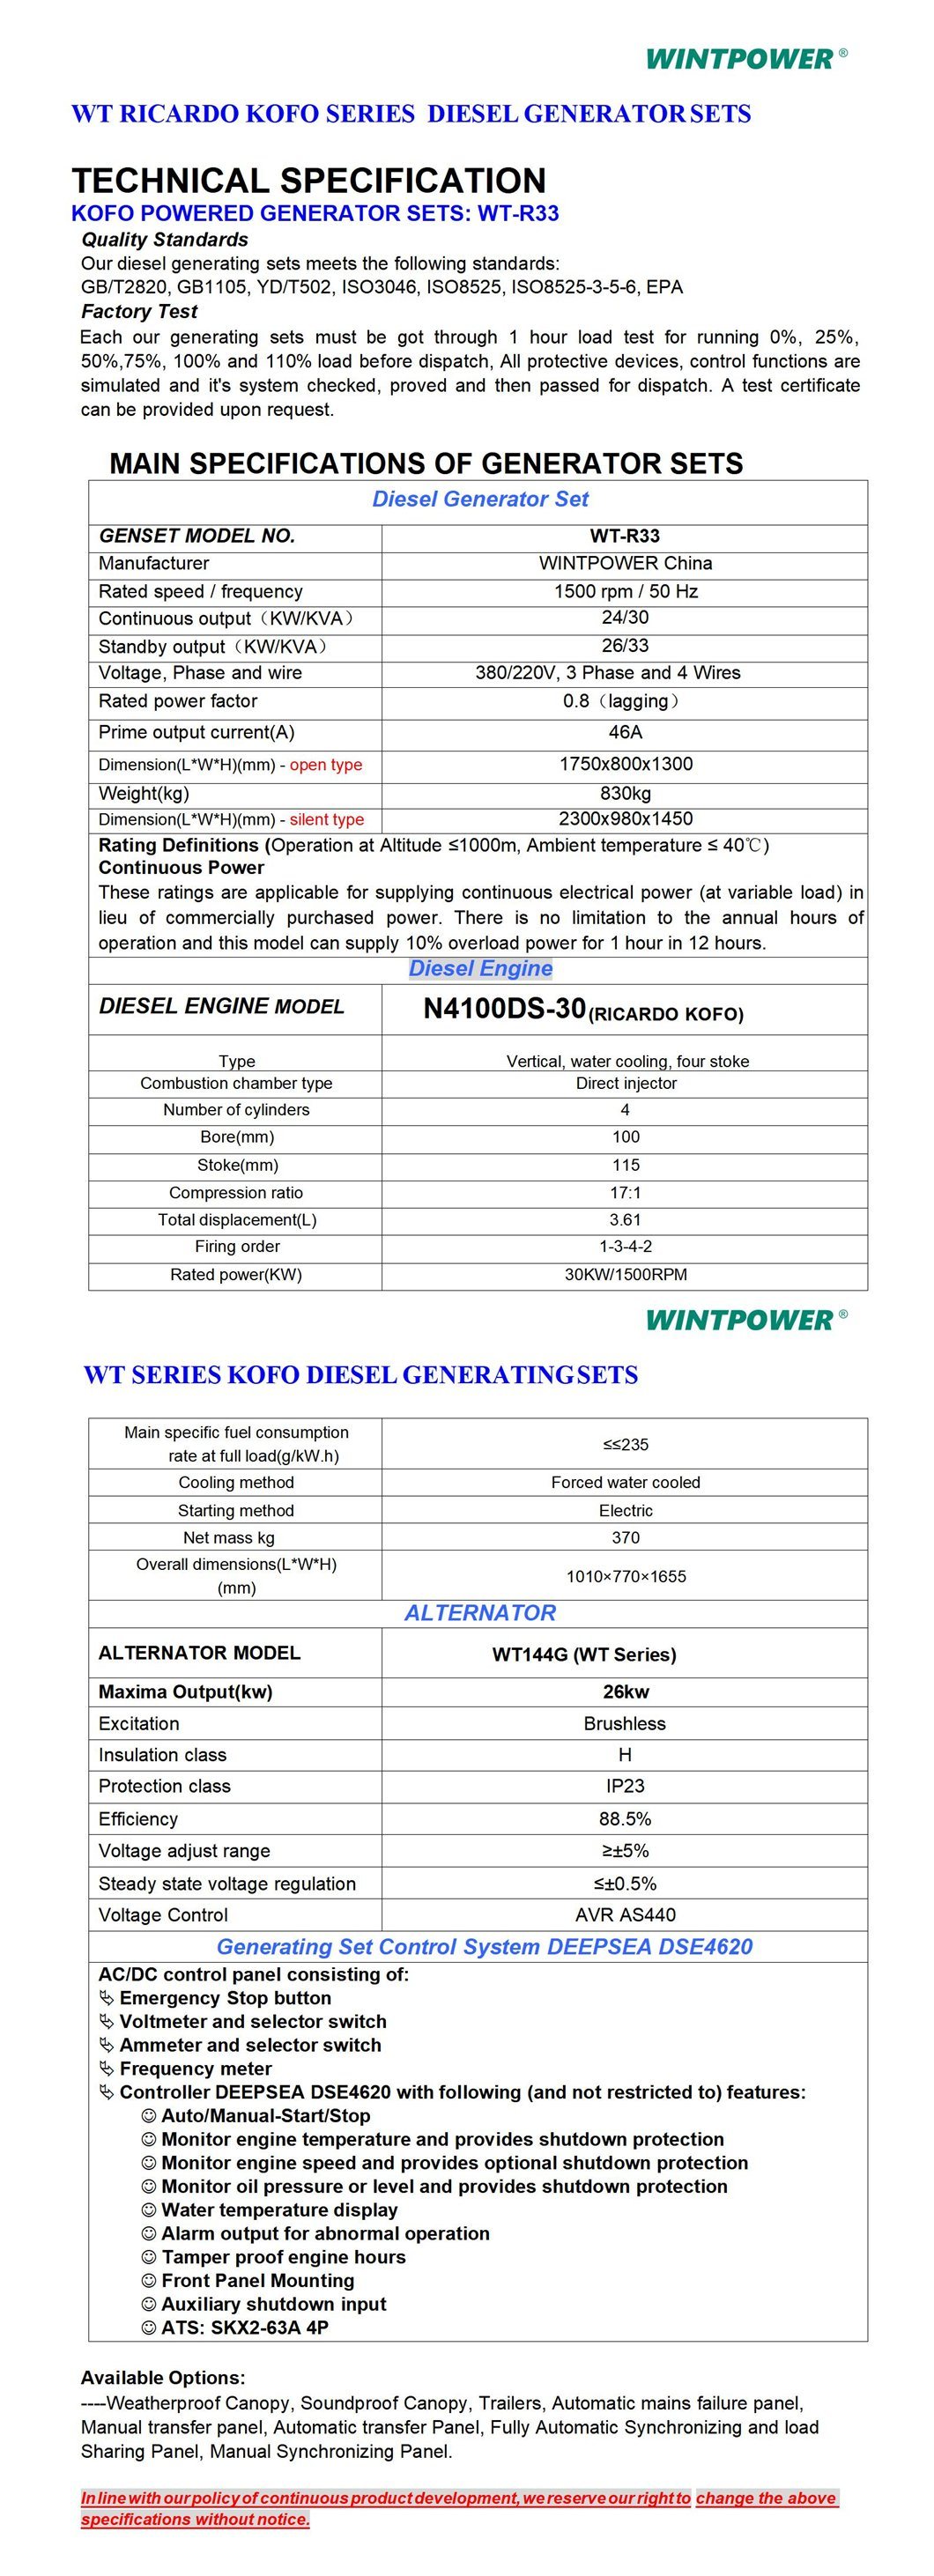 Weichai Kofo Ricardo дизельдік электр генераторы жинағы Dg генераторы 30кВА N4100ds-30 40kVA N4105ds-38 50kVA N4105ds-42 60kVA N4105zds 75kVA N4105zds 83kVA R4105